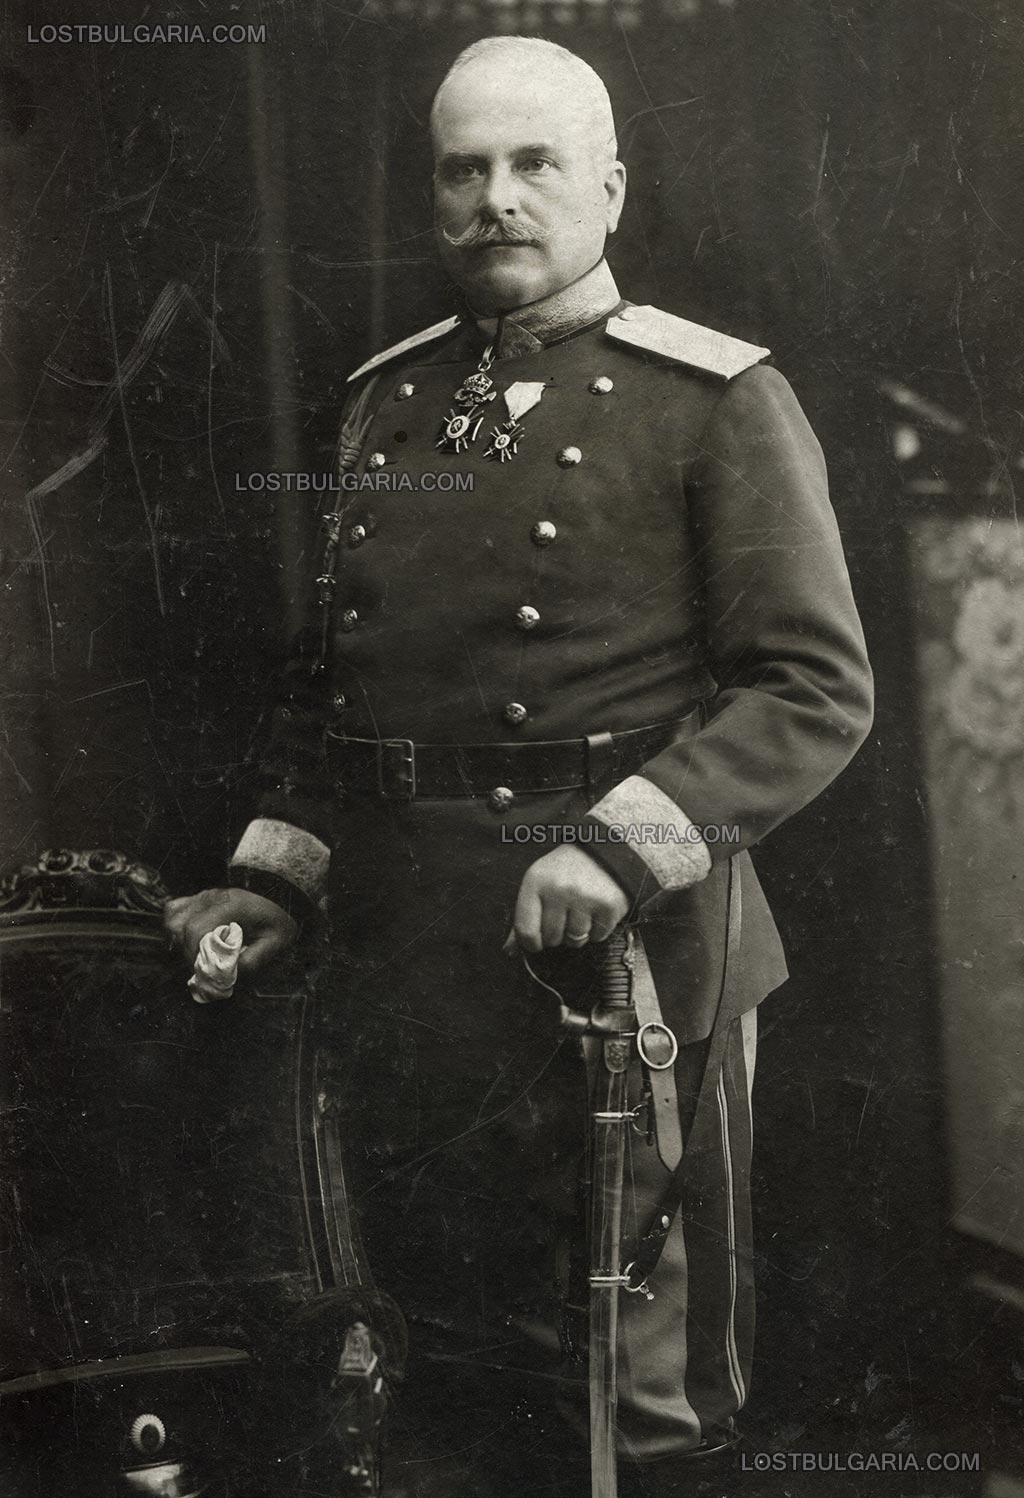 Студиен портрет на генерал Тодор Кантарджиев, вероятно заснет около 1918 година